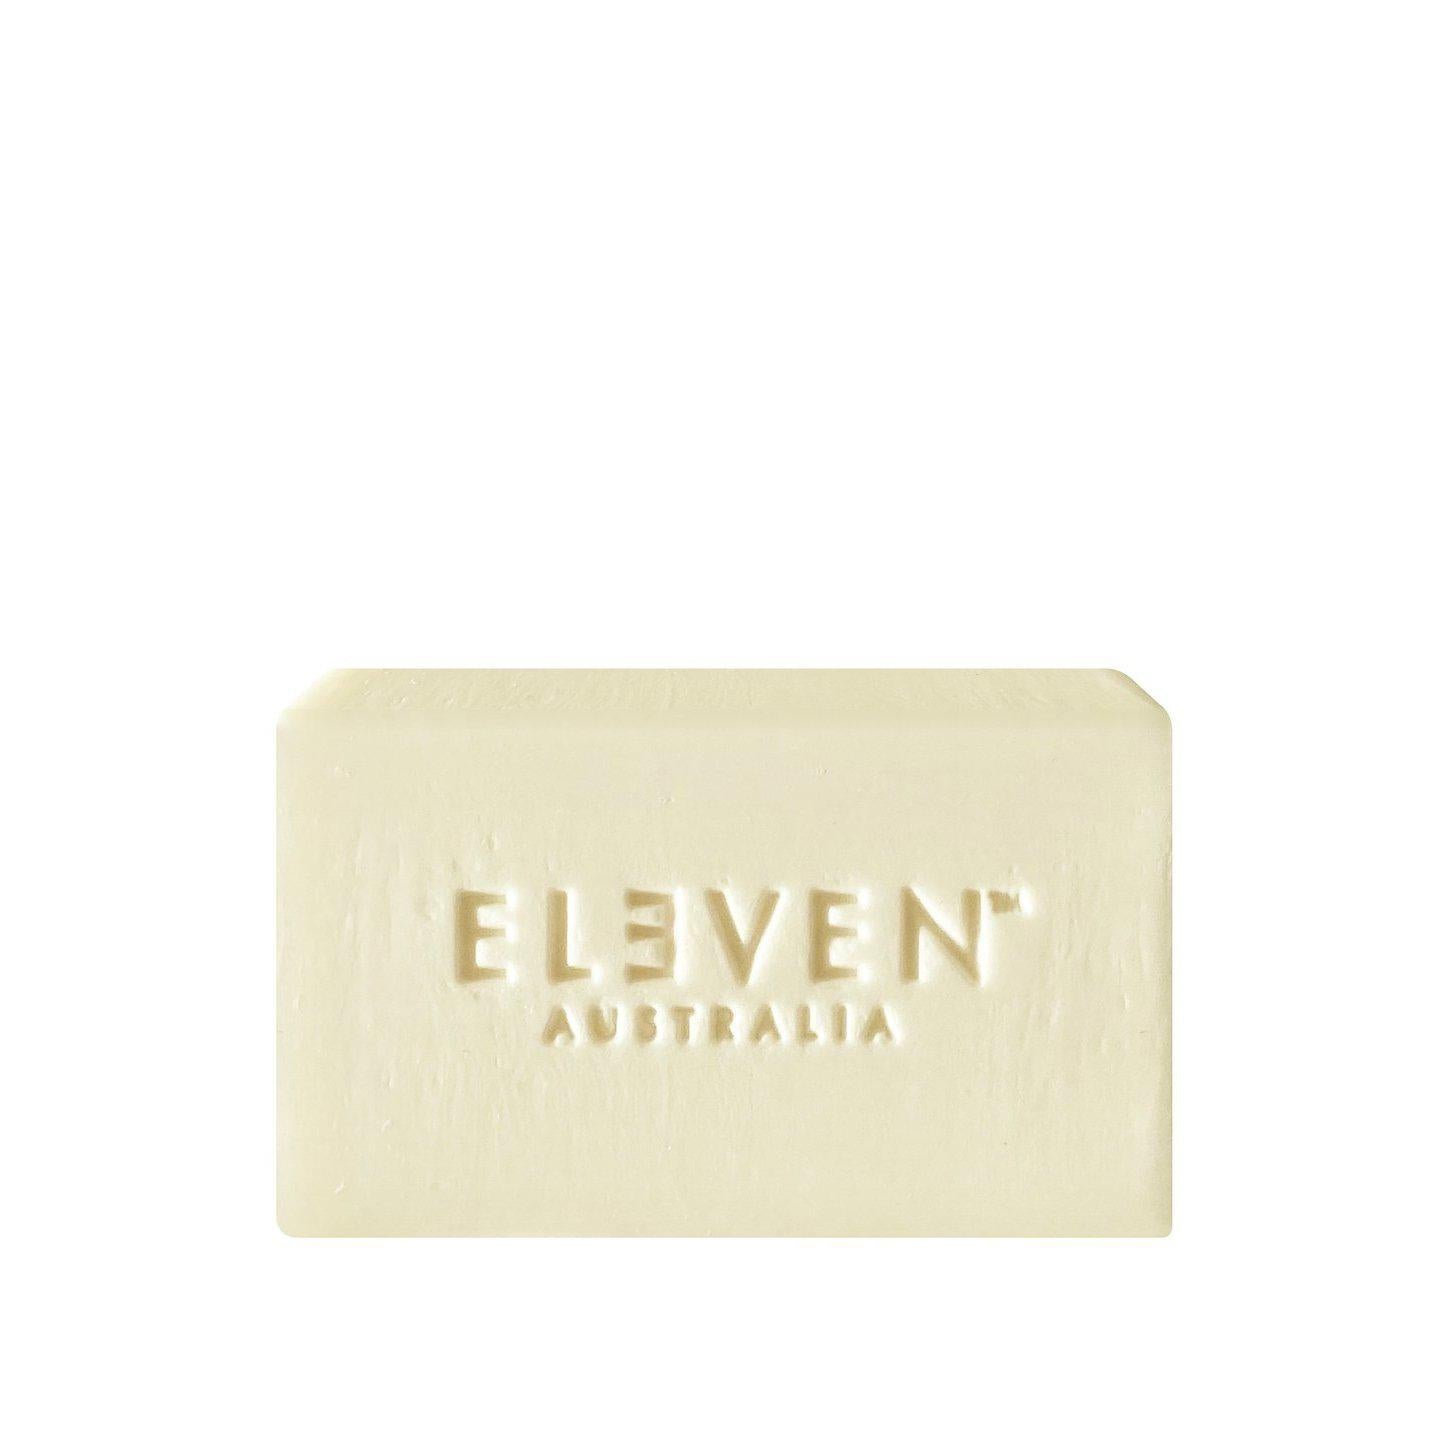 Eleven Australia Gentle Cleanse Shampoo Bar 70gr